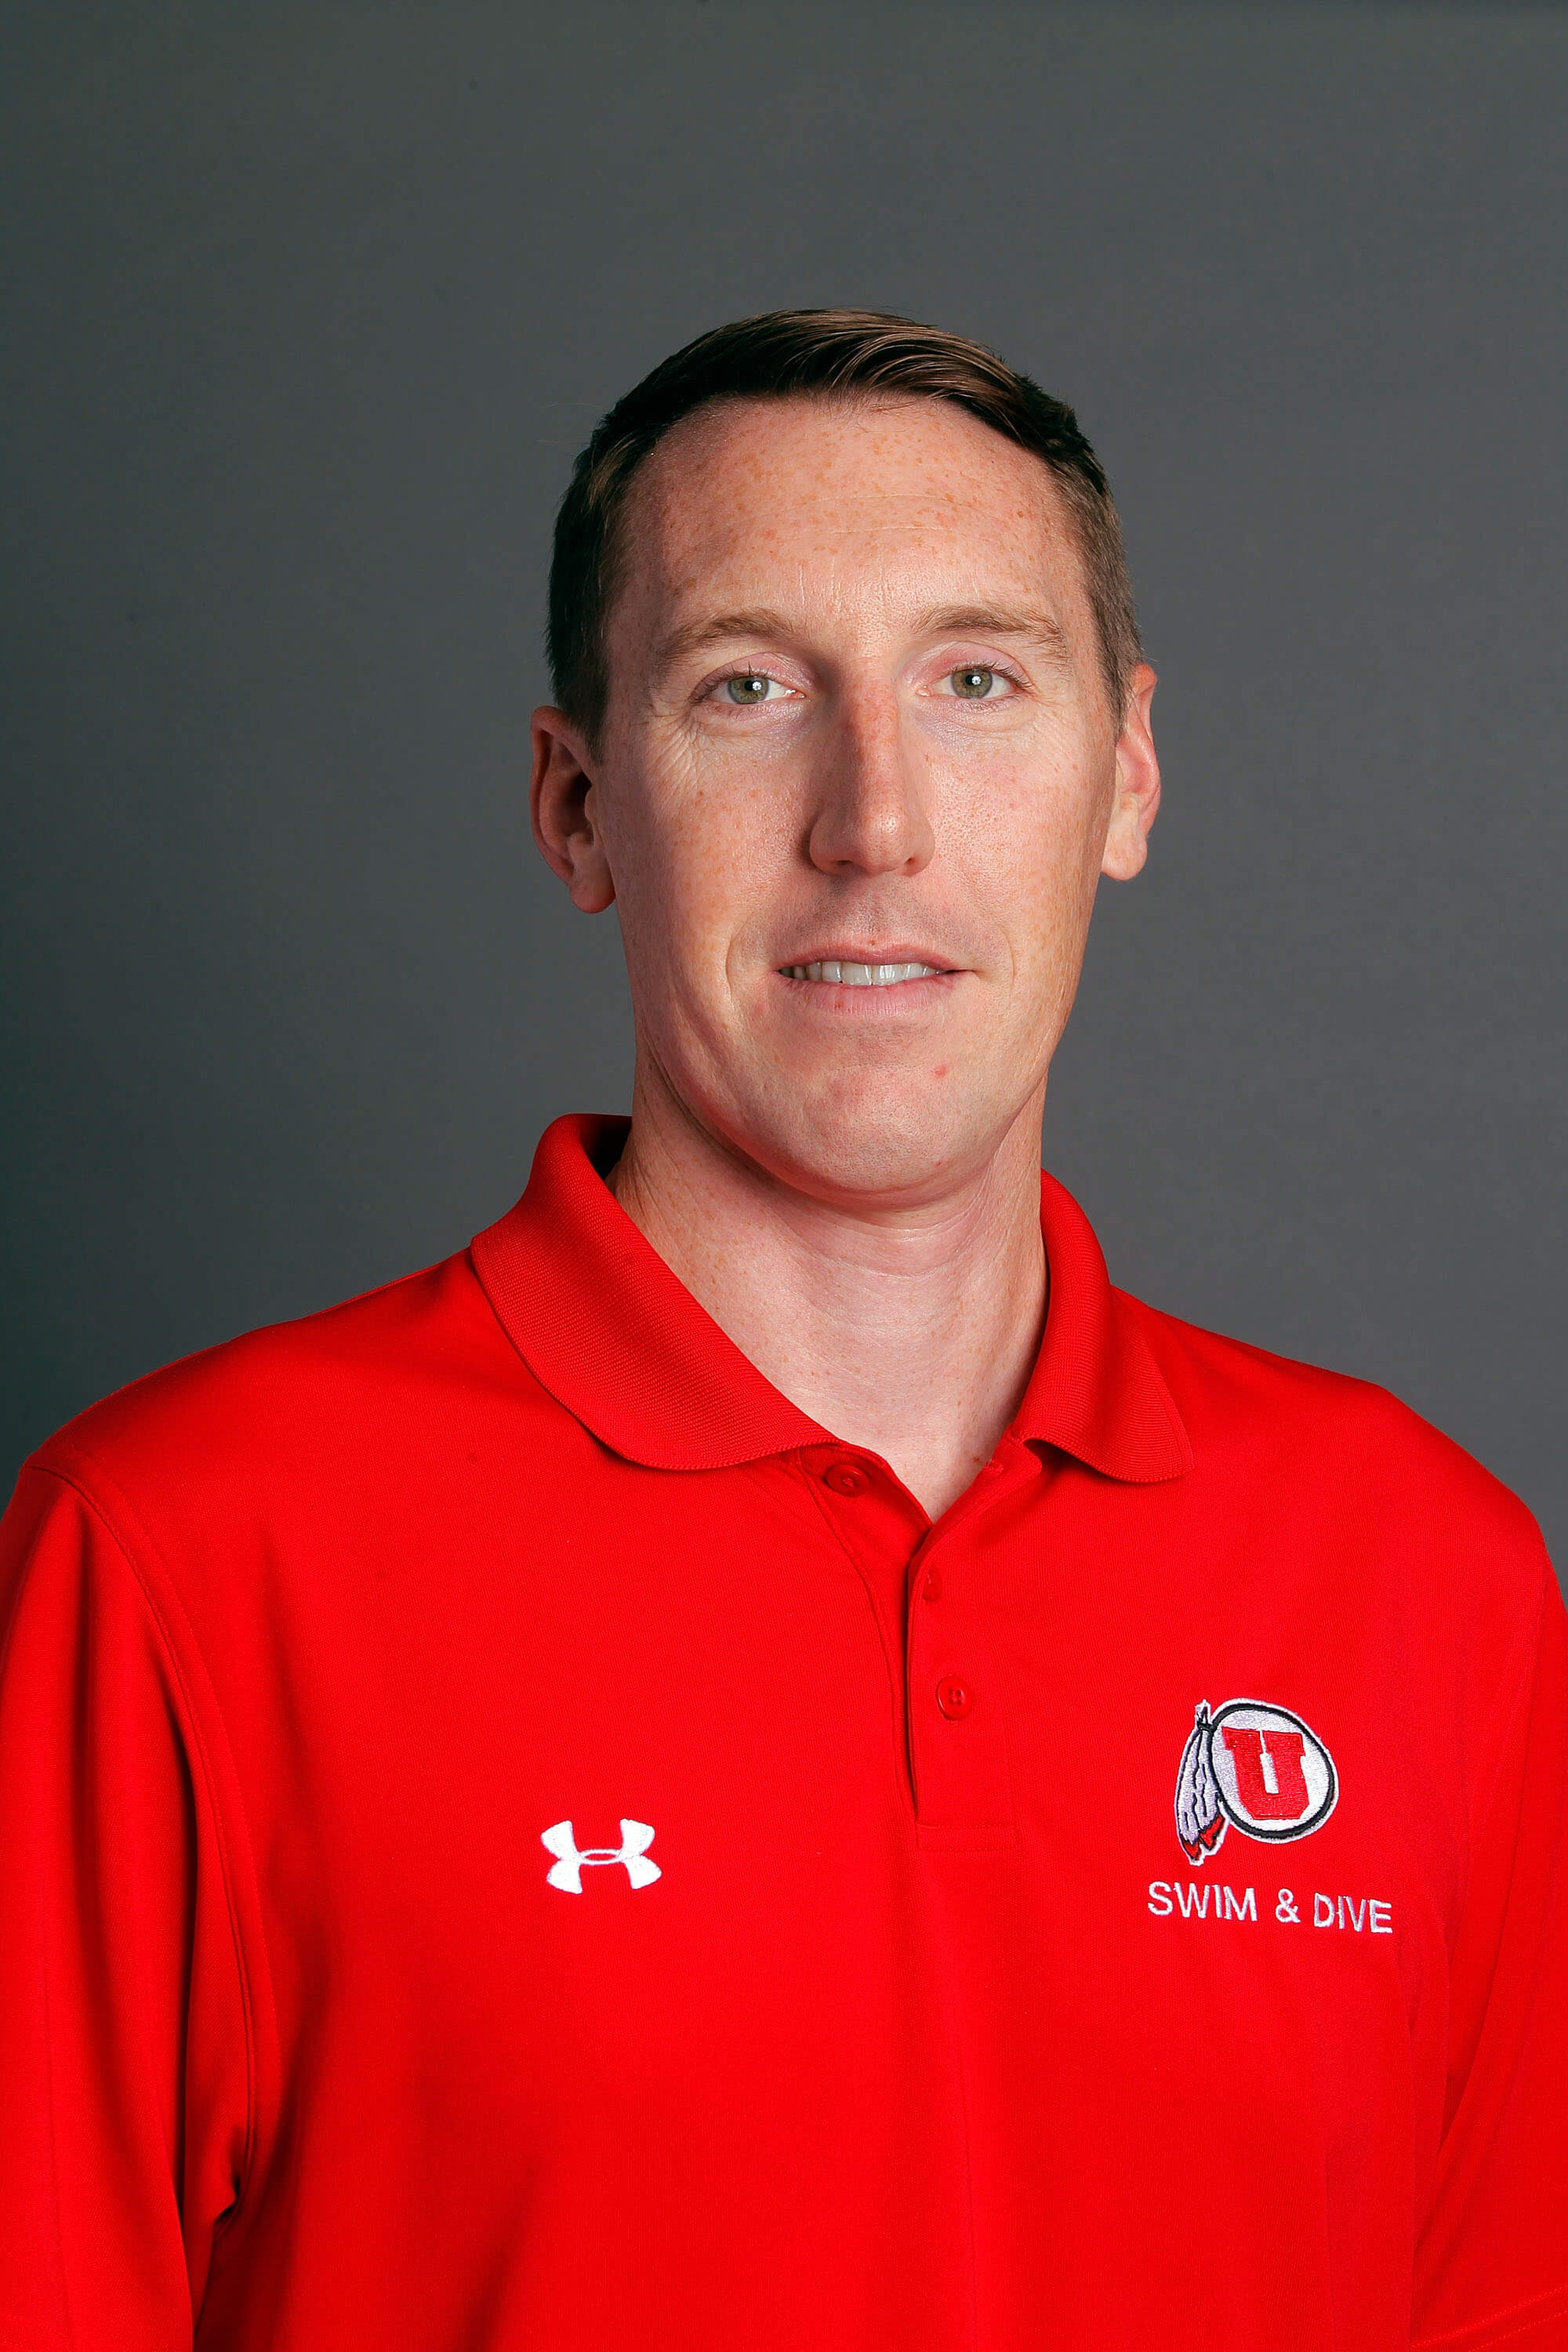 Joe Dykstra (coach), University of Utah Swim team August 26, 2013 in Salt Lake City, Utah. (Photo/Steve C. Wilson)